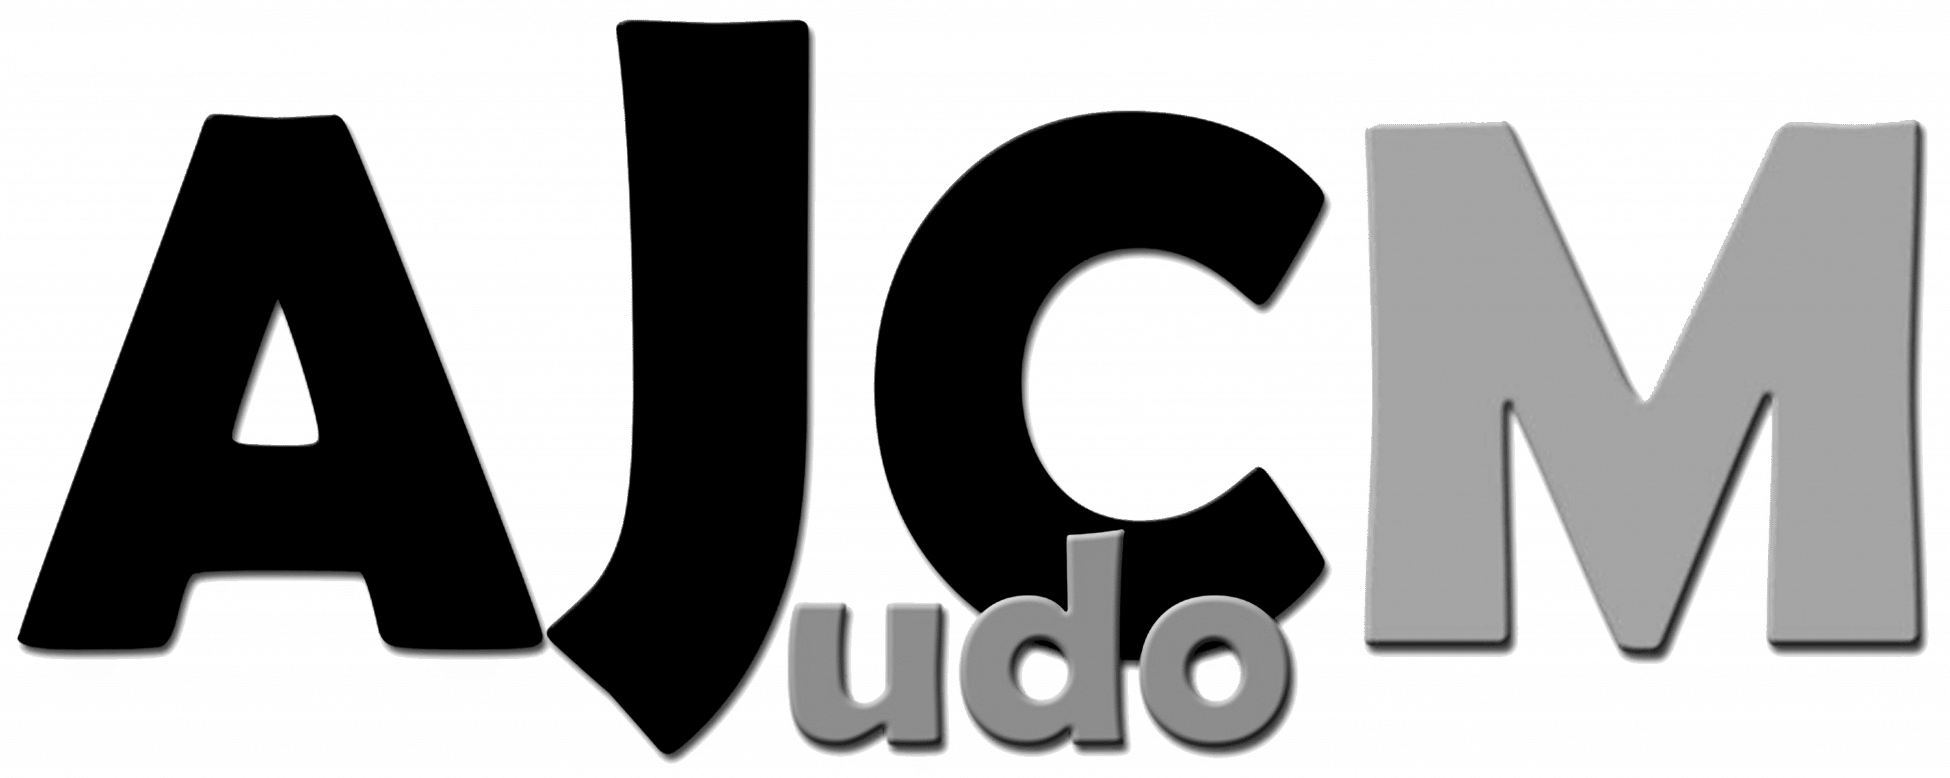 logo_broderie_judo_nb